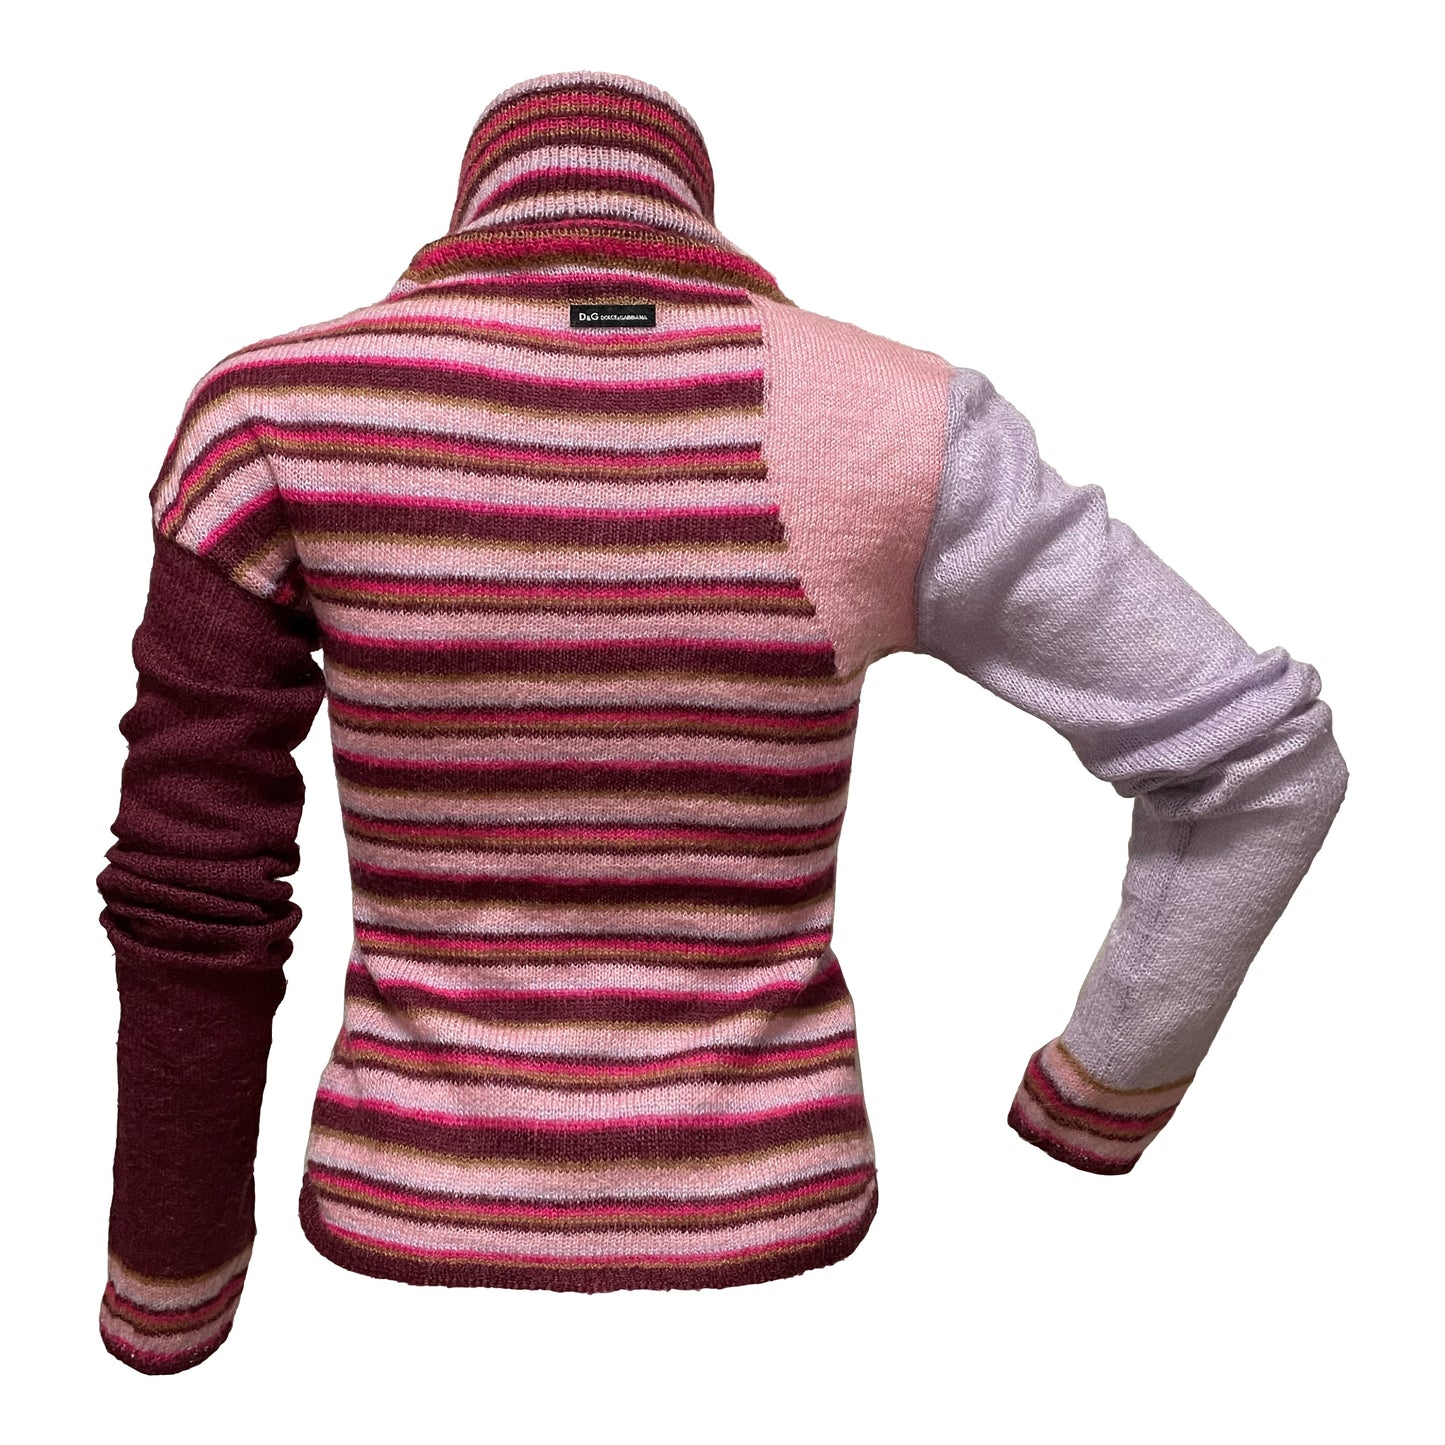 D&G Fall Winter 2000 Striped Turtleneck Sweater